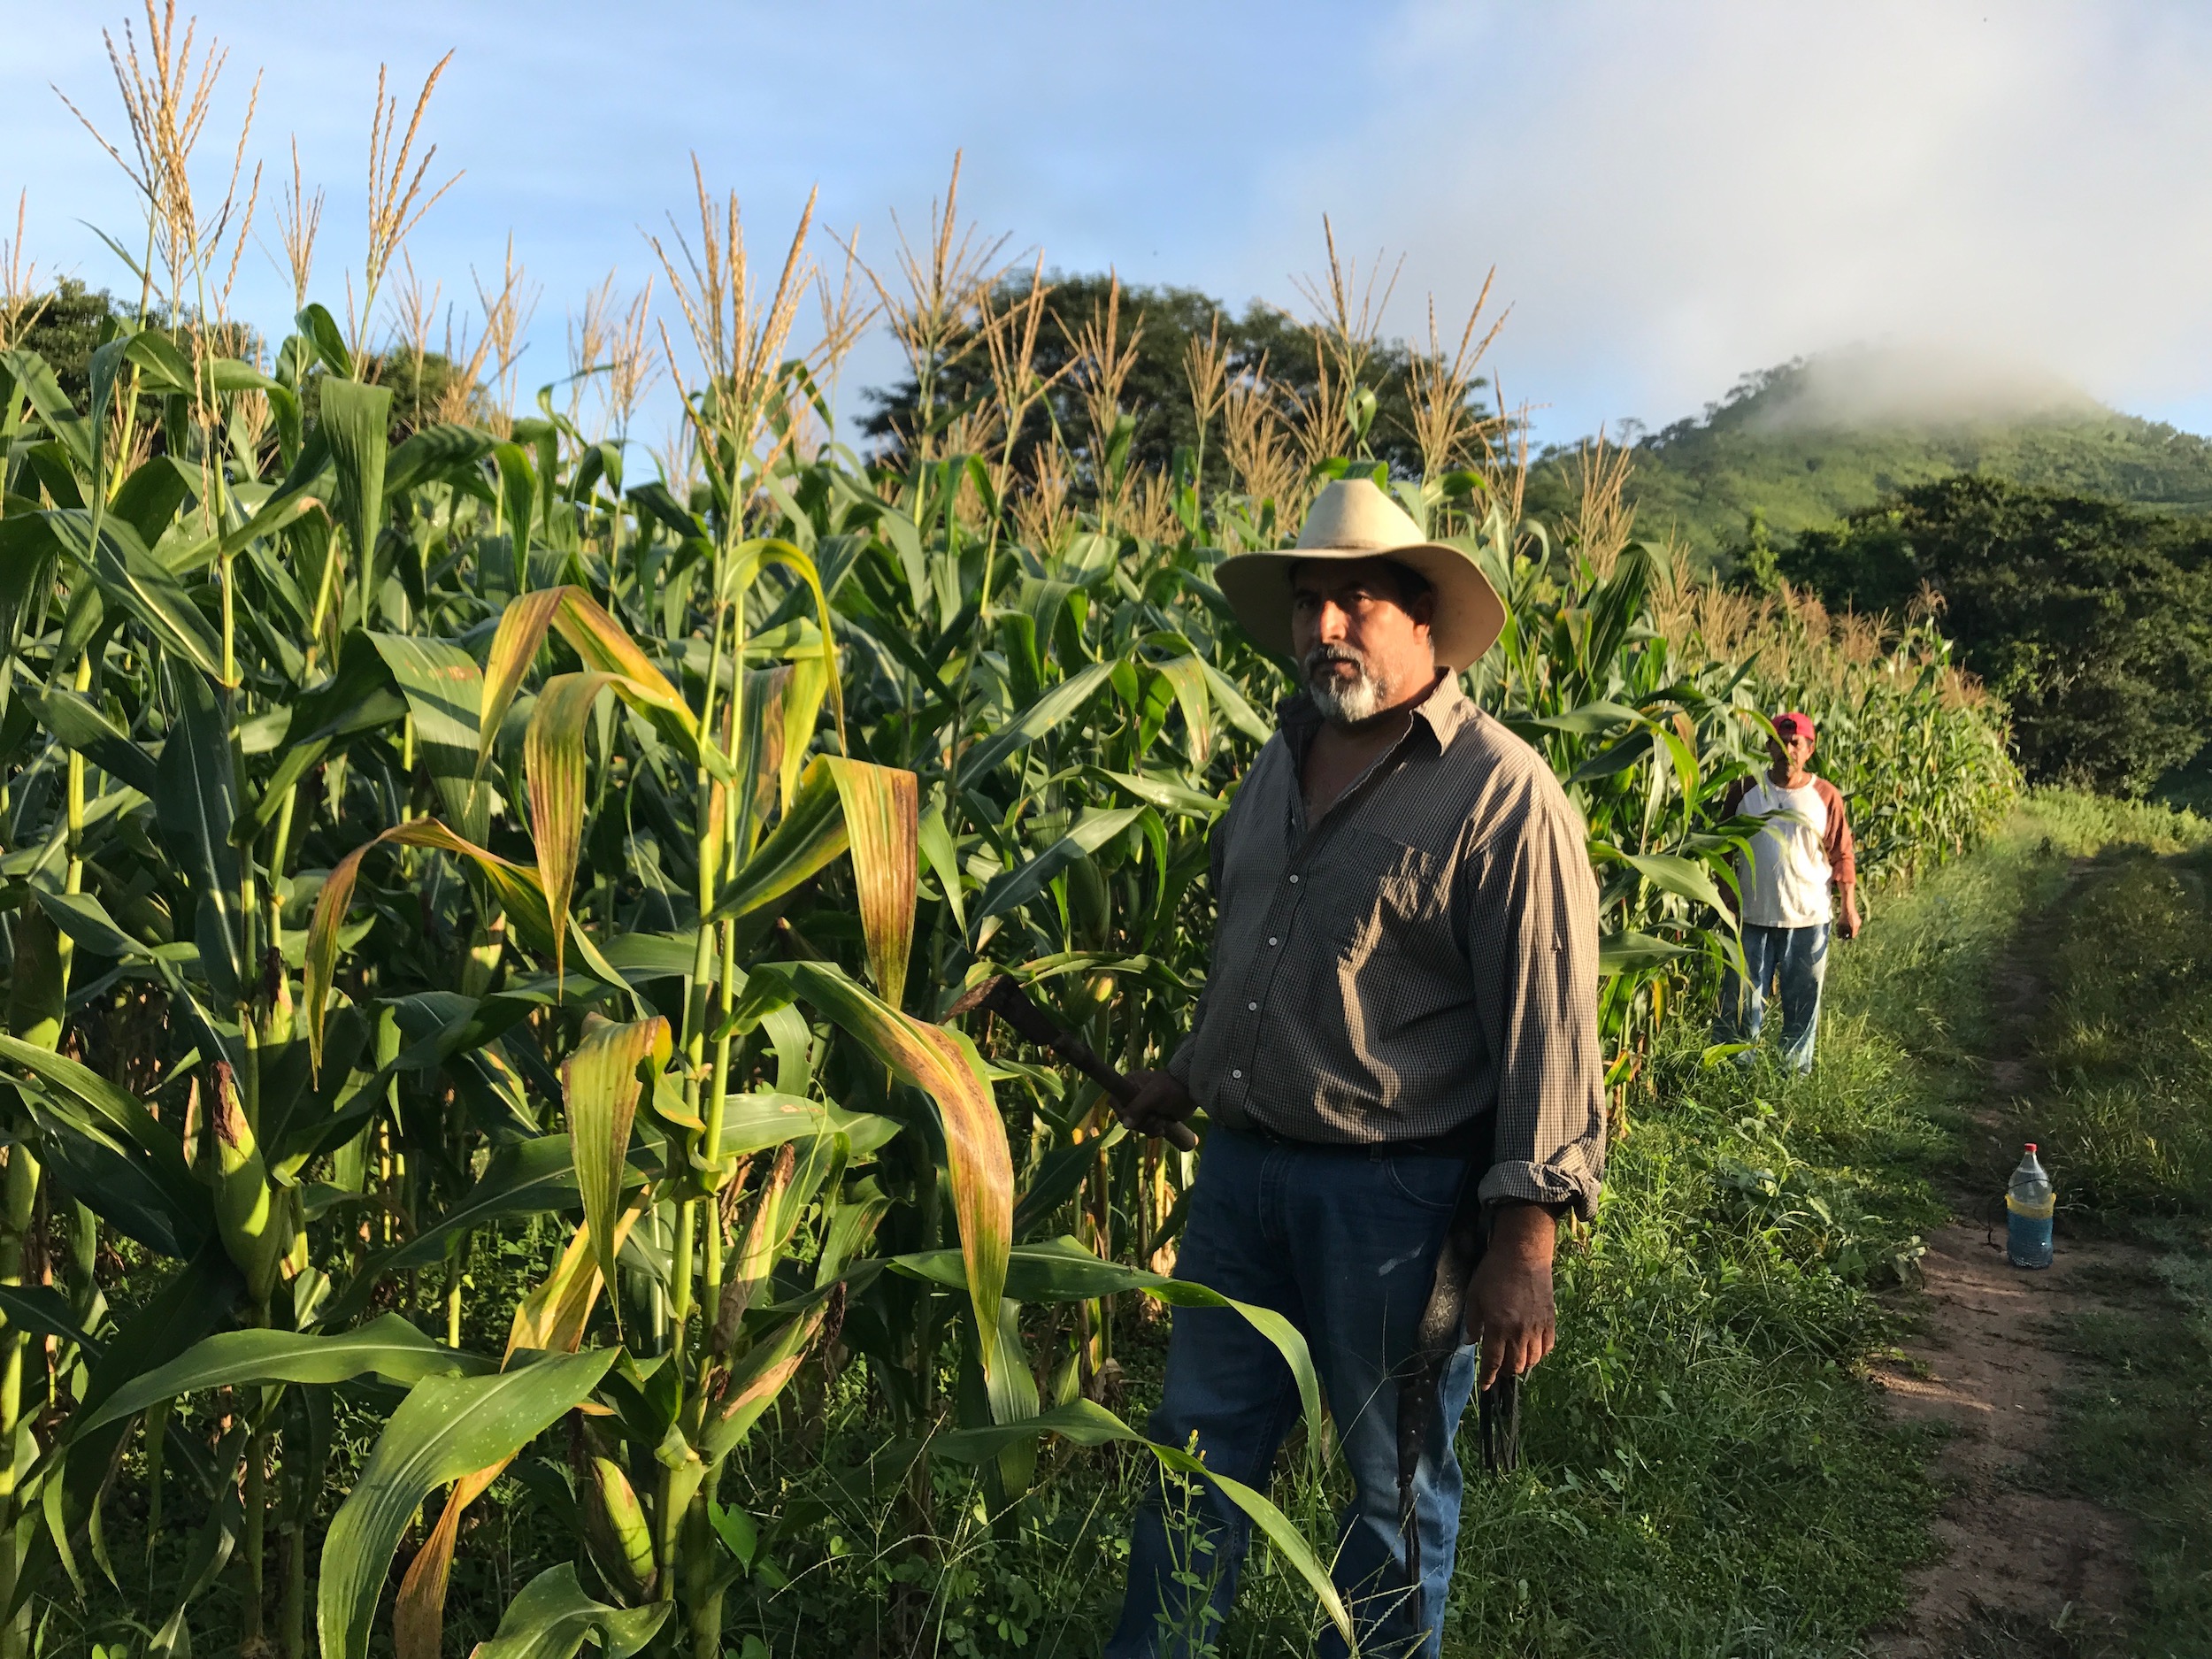 Francisco Sunrise Corn Harvest